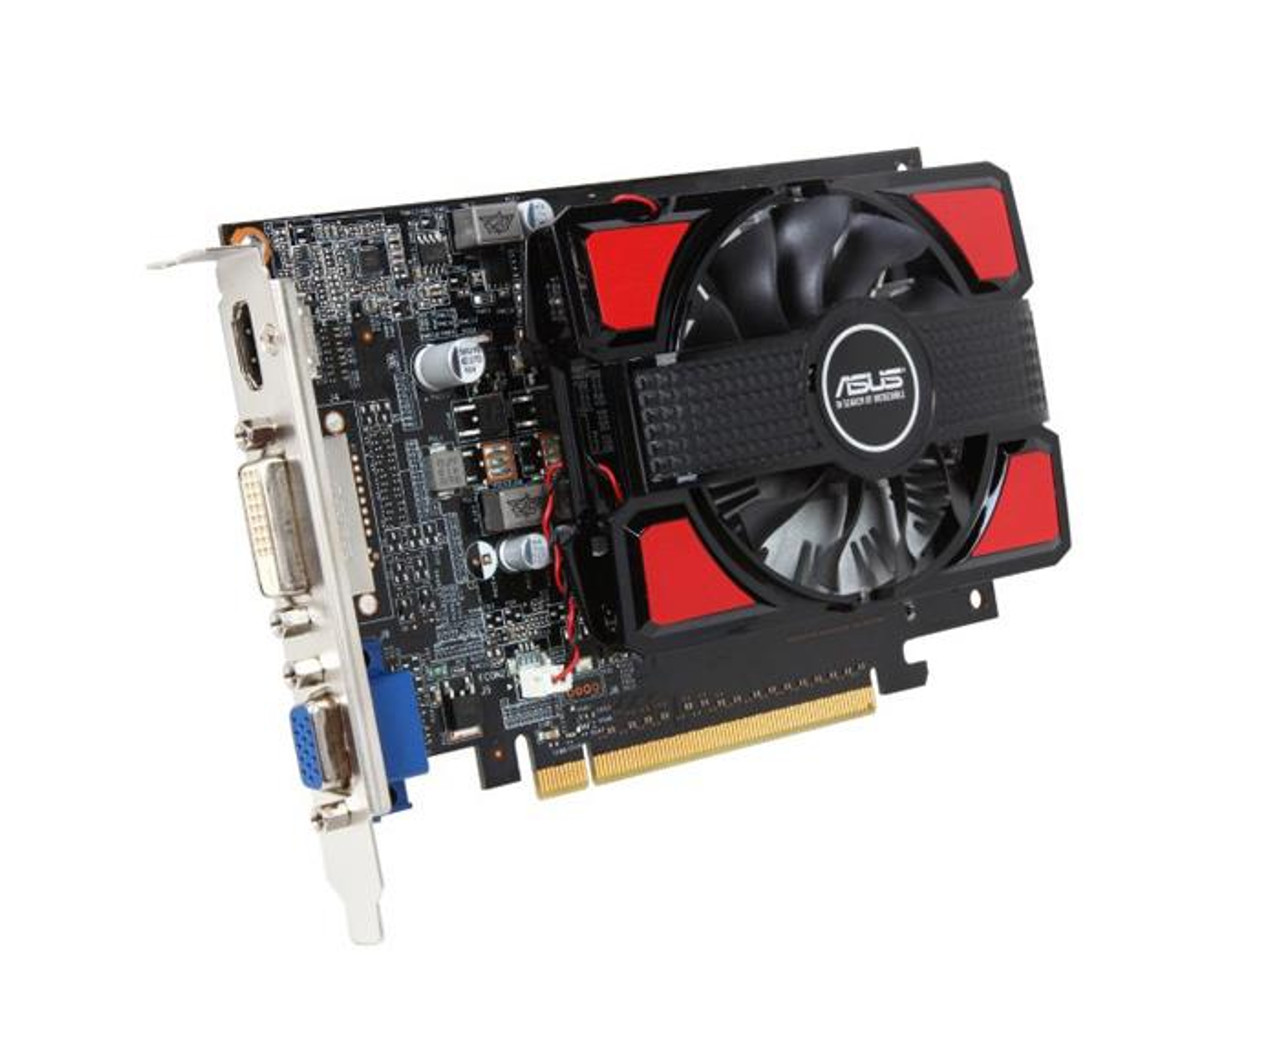 Seclife Nvidia GeForce GT740 4GB 128Bit DDR3 PCI-E x16 Graphics Card